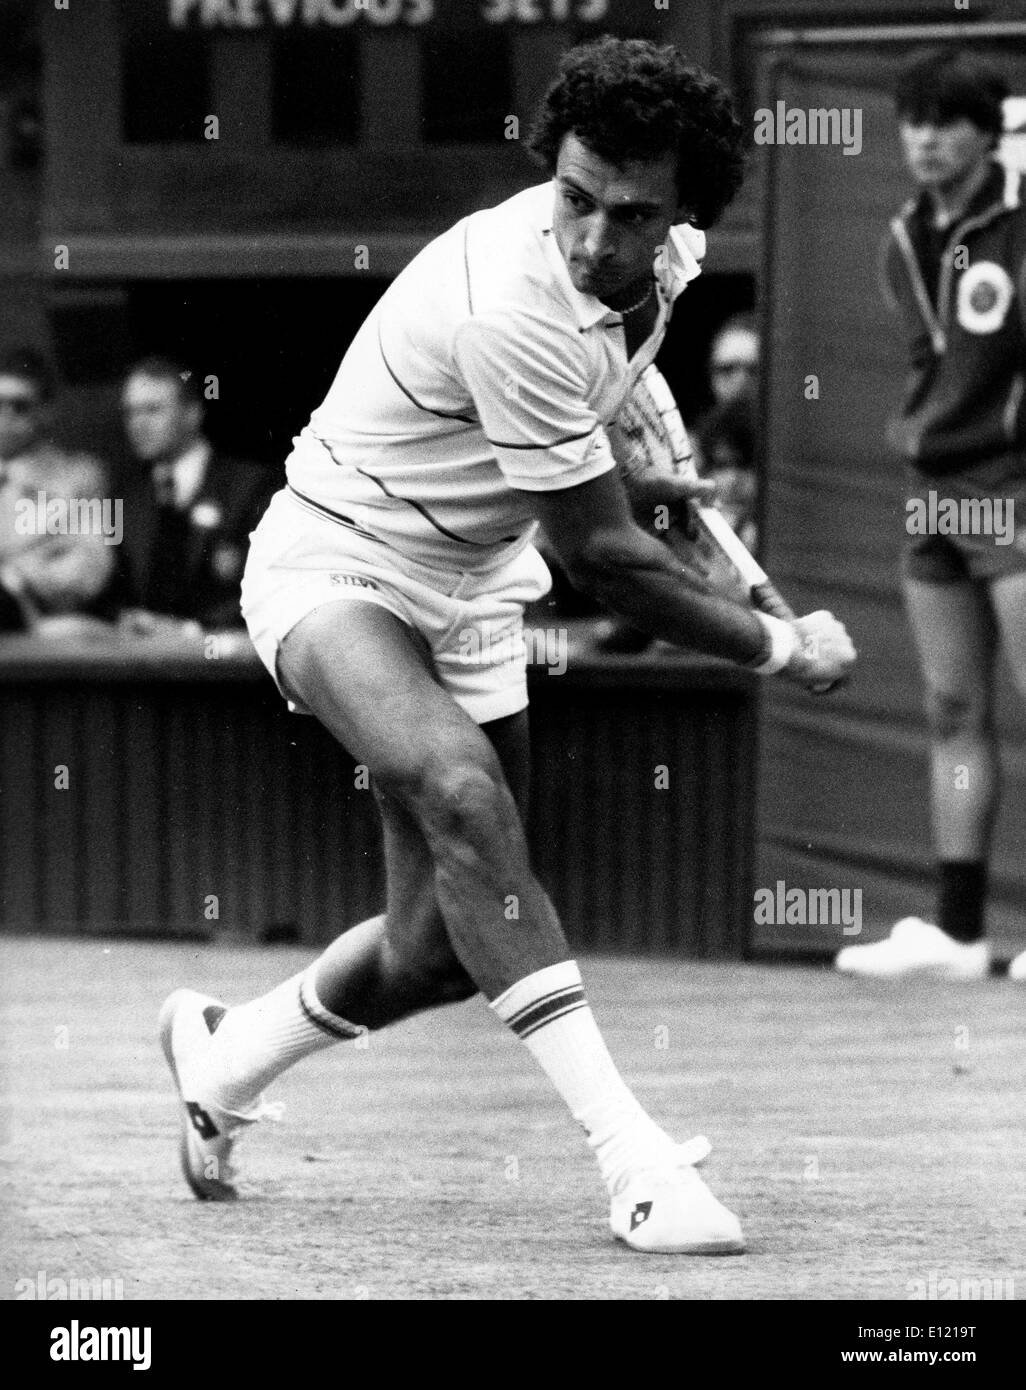 JOSE LUIS CLERC playing against J Lloyd at Wimbledon Stock Photo